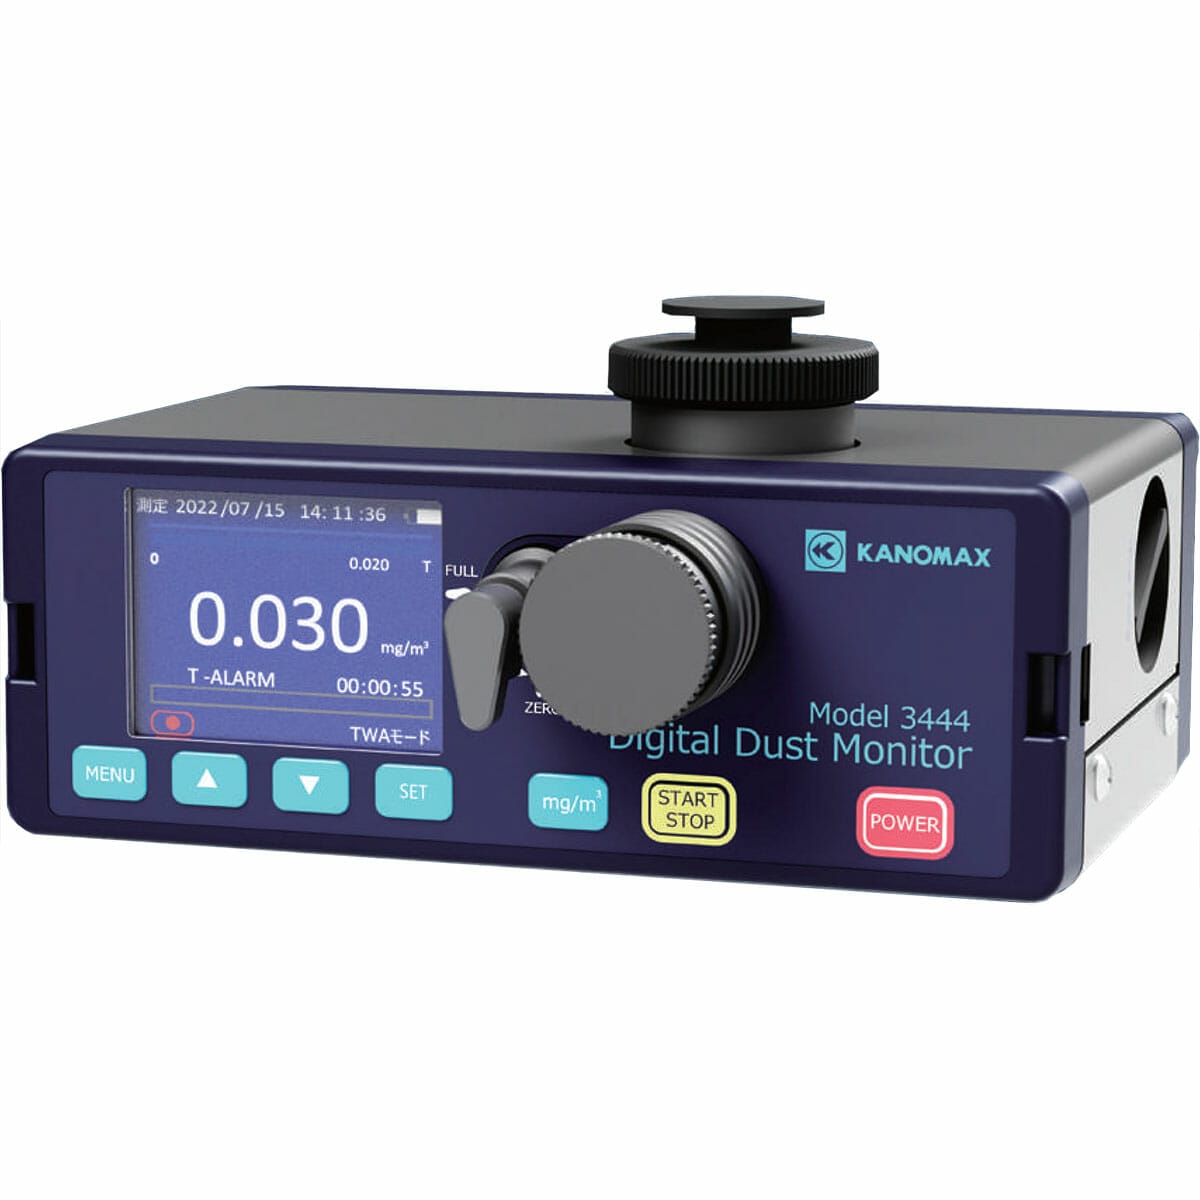 KANOMAX Digital Dust Monitor – Model 3444